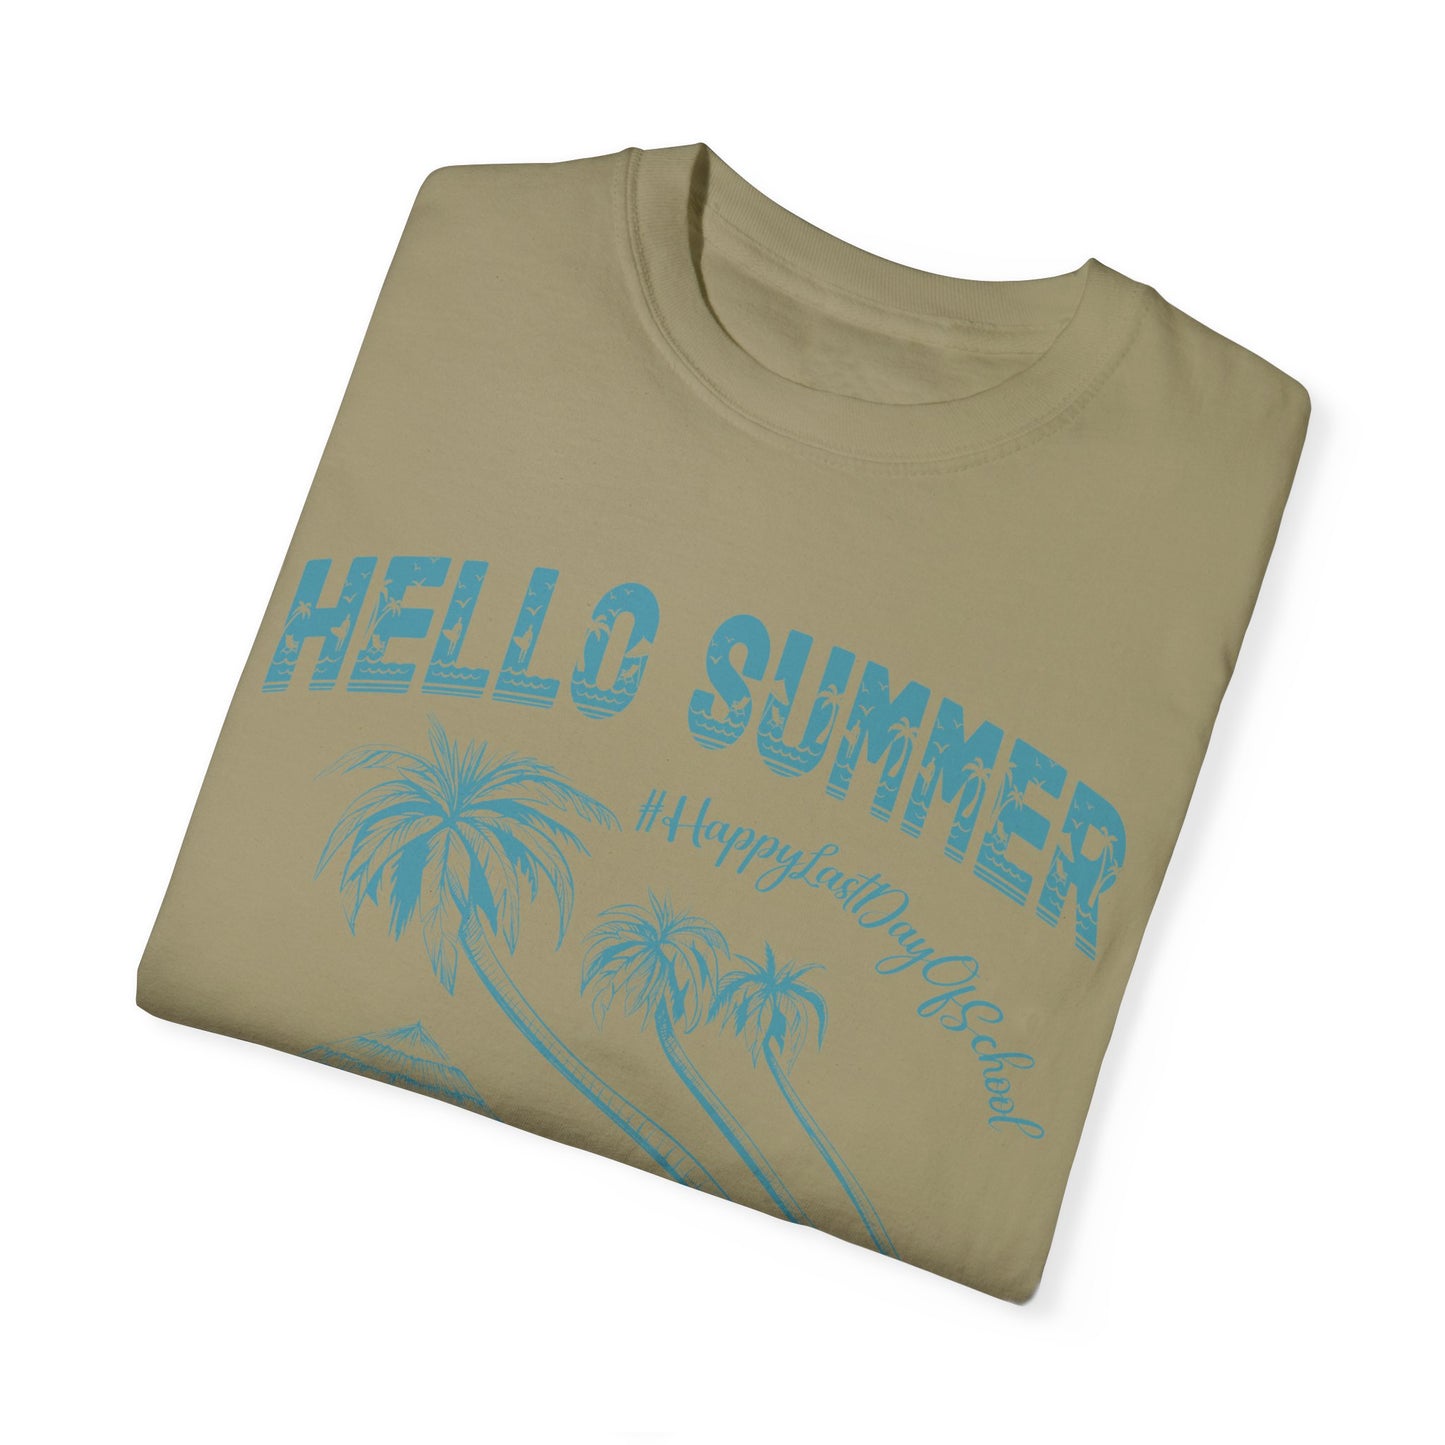 Hello Summer Shirt, Happy Last Day Of School Shirt, End Of School Shirt, Teacher Summer Shirt, Teacher Gifts, Summer School Shirt, CC1624